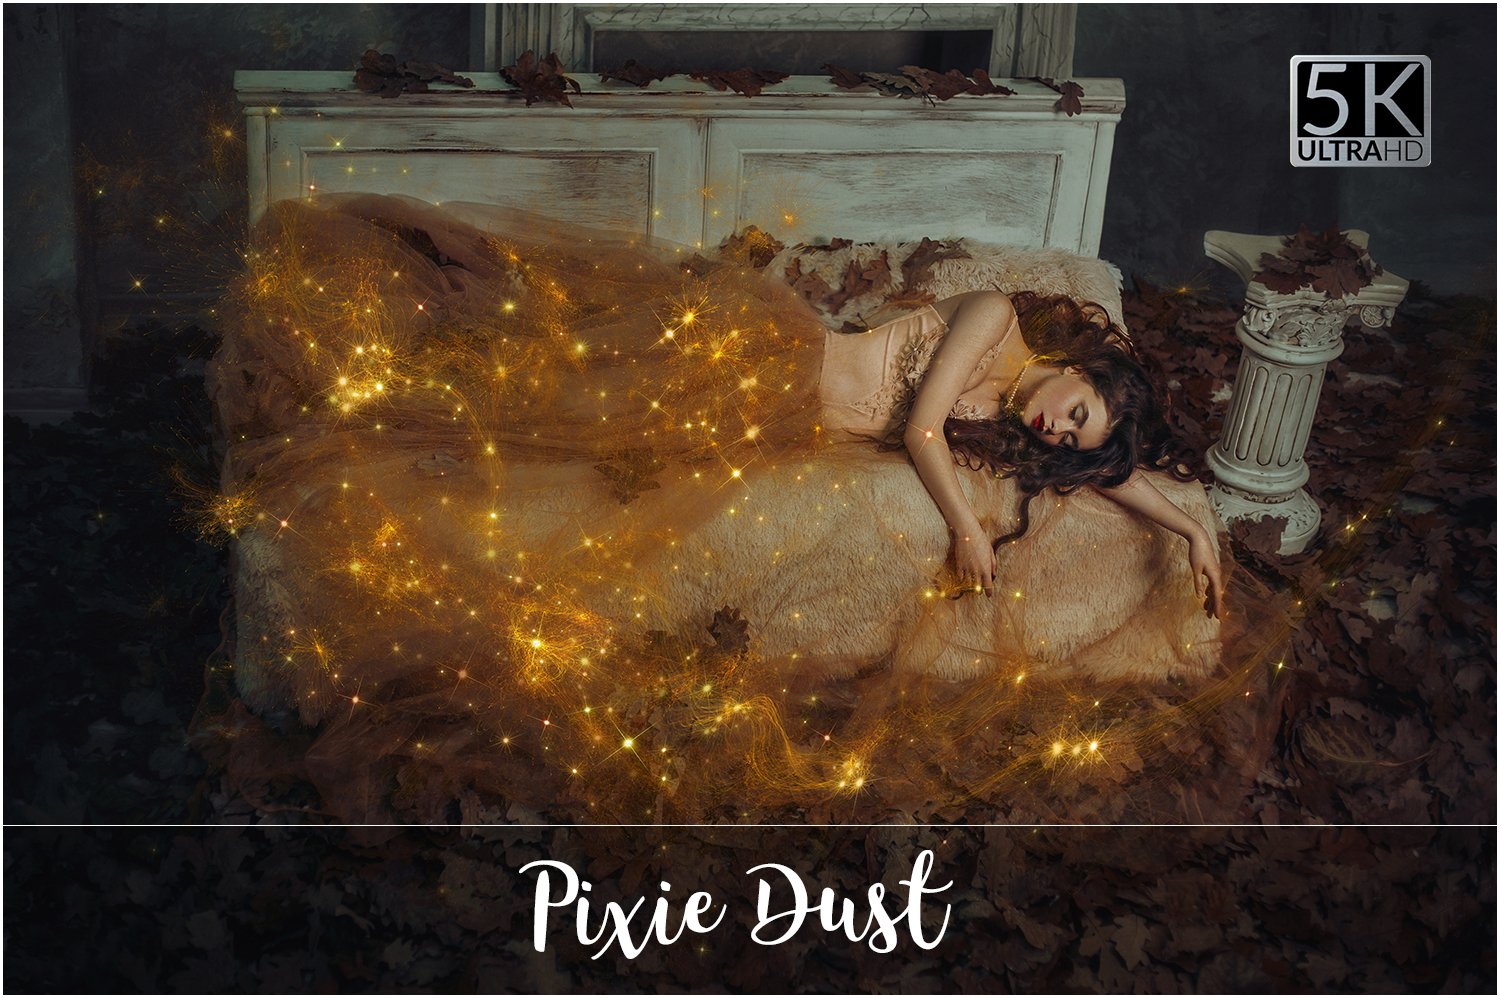 魔幻背景纹理 5K Pixie Dust Overlays